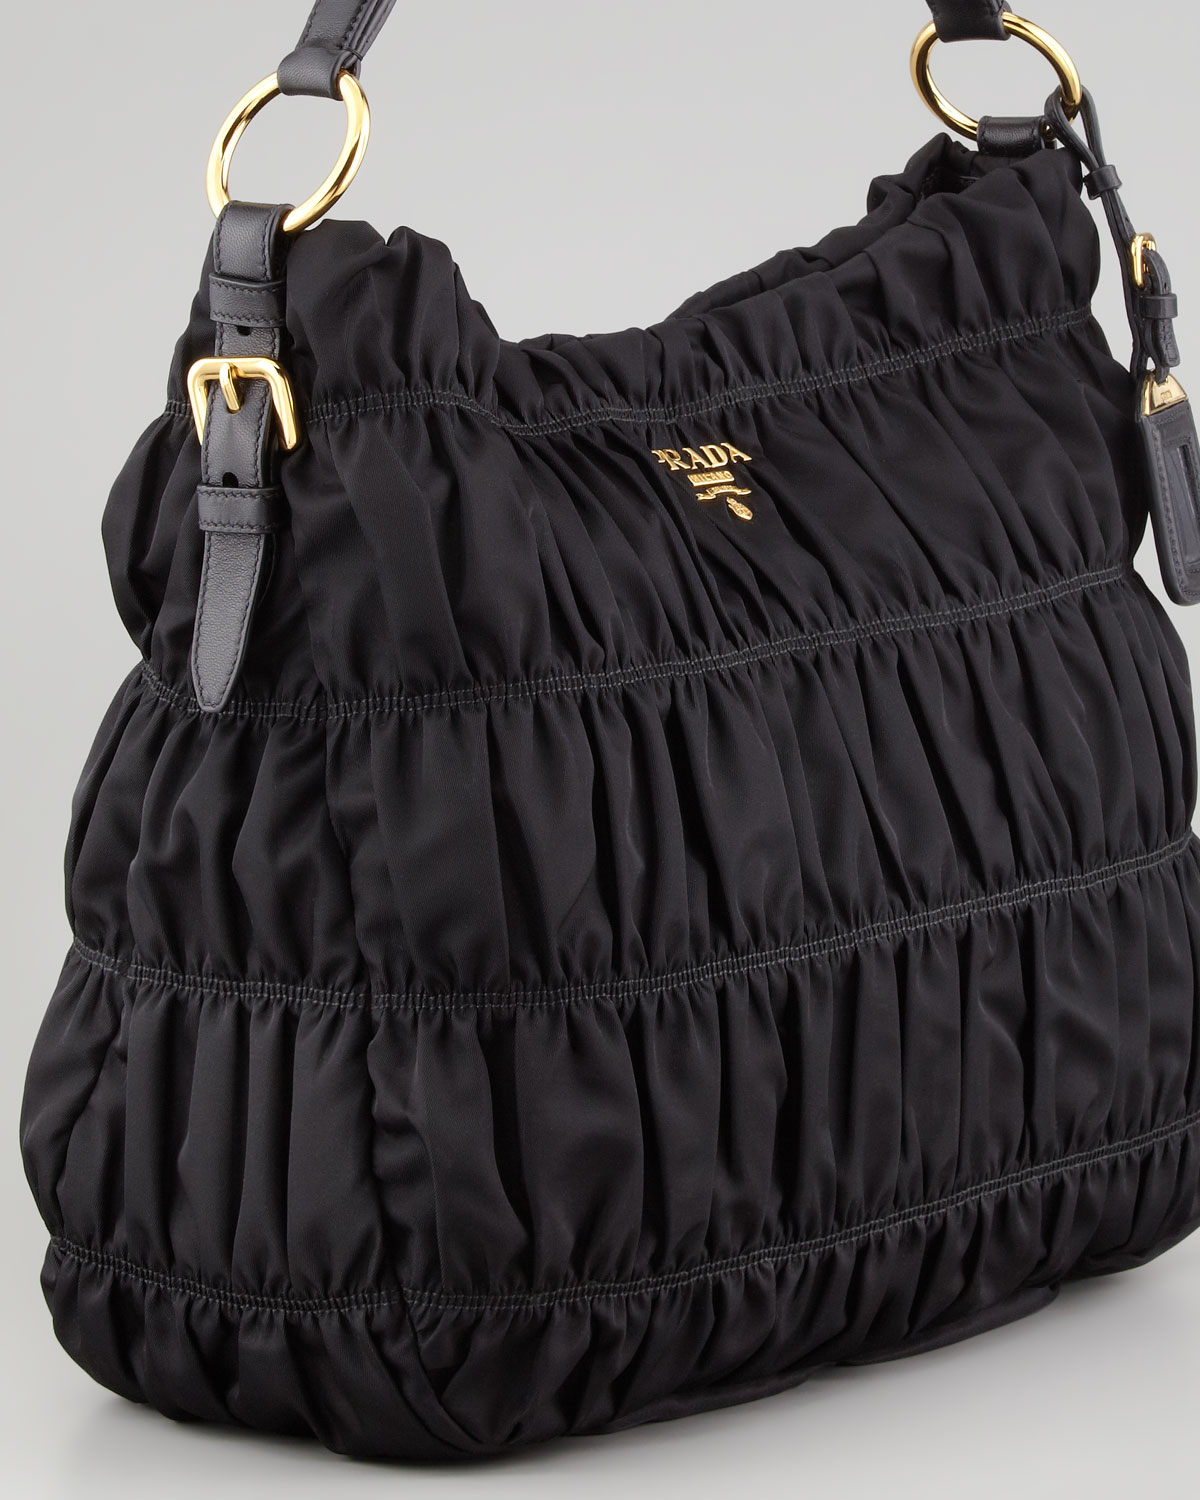 Prada Nylon Gaufre Large Hobo Bag in Black | Lyst  